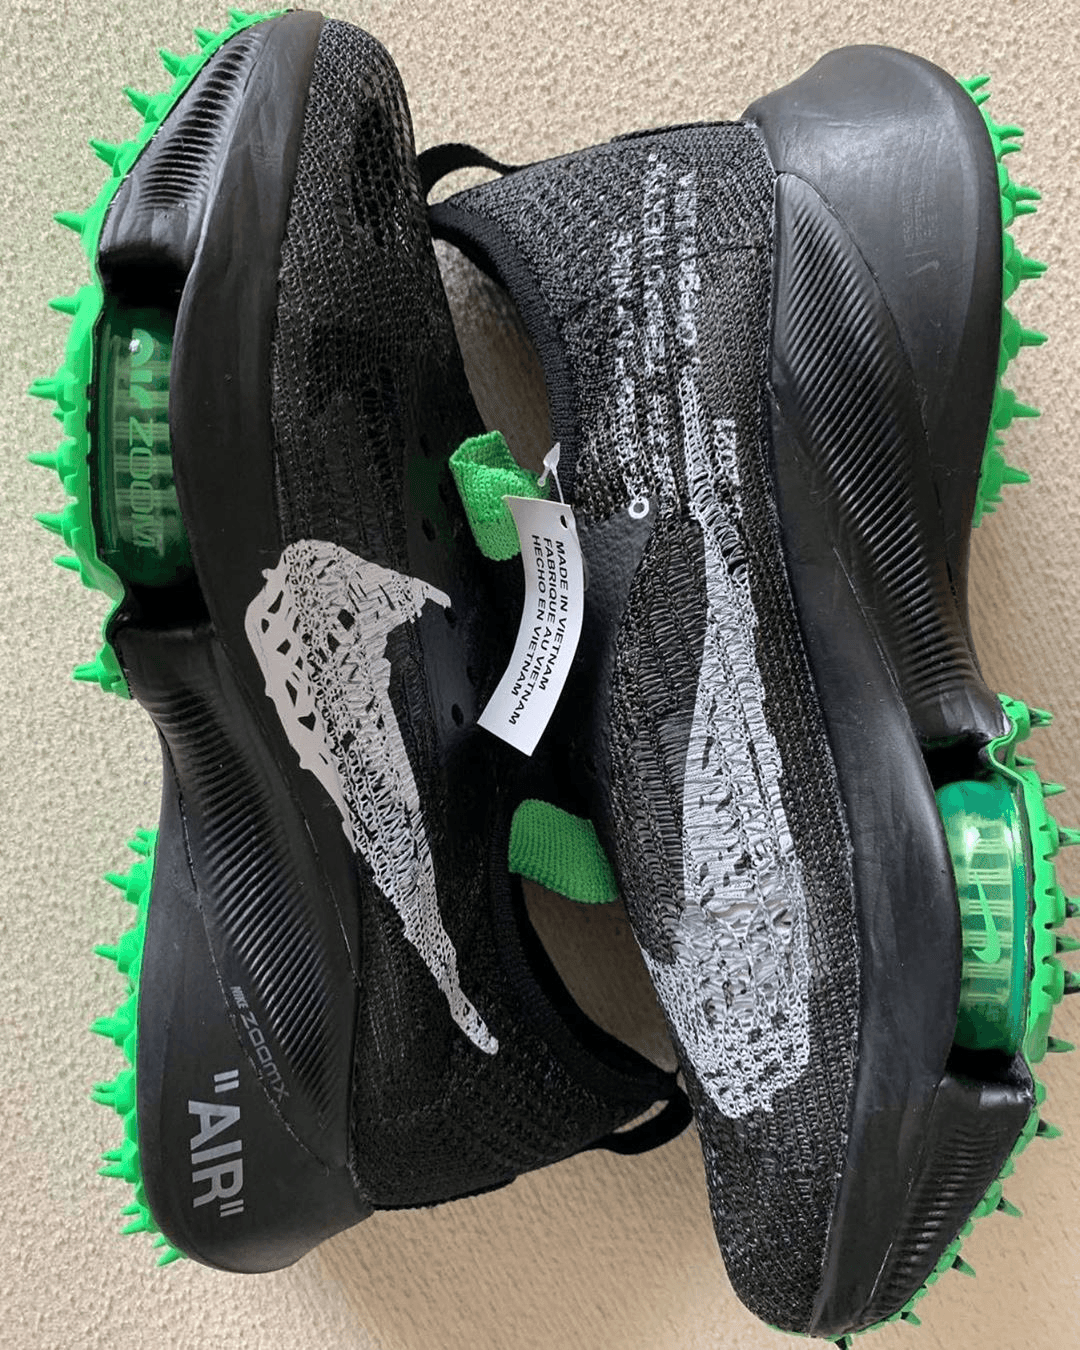 OW x Nike新联名黑绿配色最新实物图曝光！钉鞋+超大网眼鞋面！